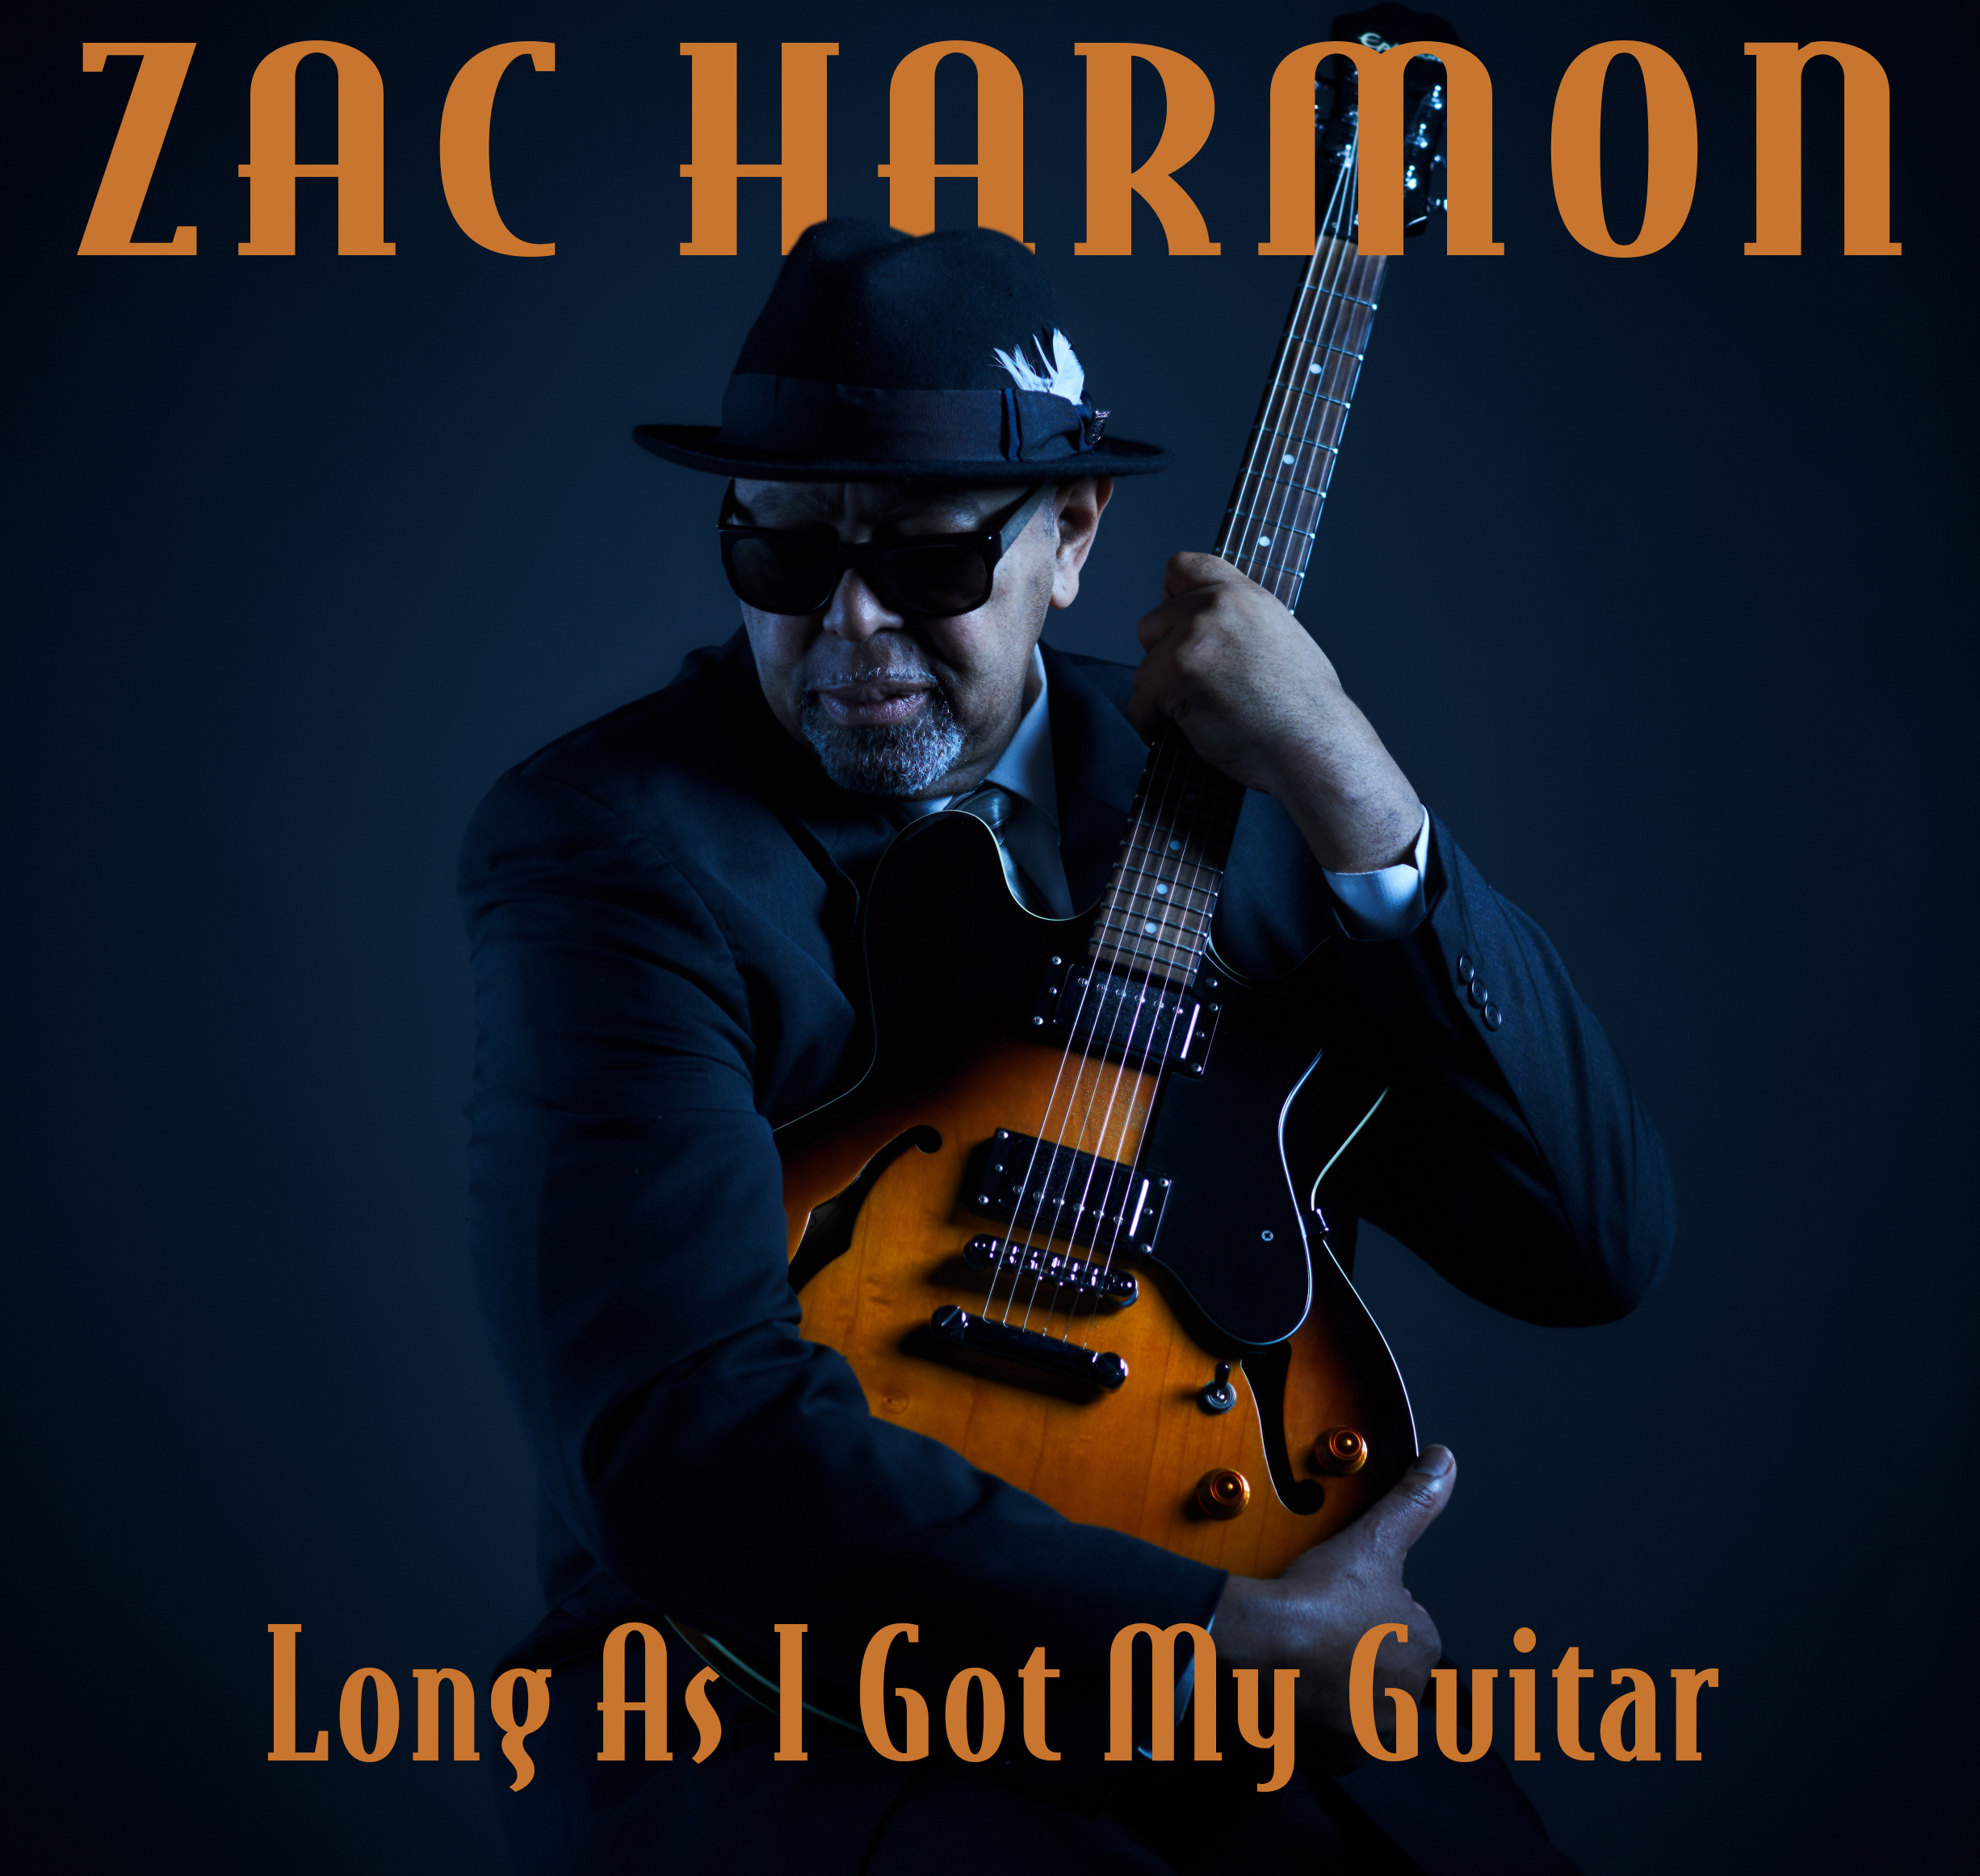 Zac Harmon Says, "Long As I Got My Guitar," on New Album